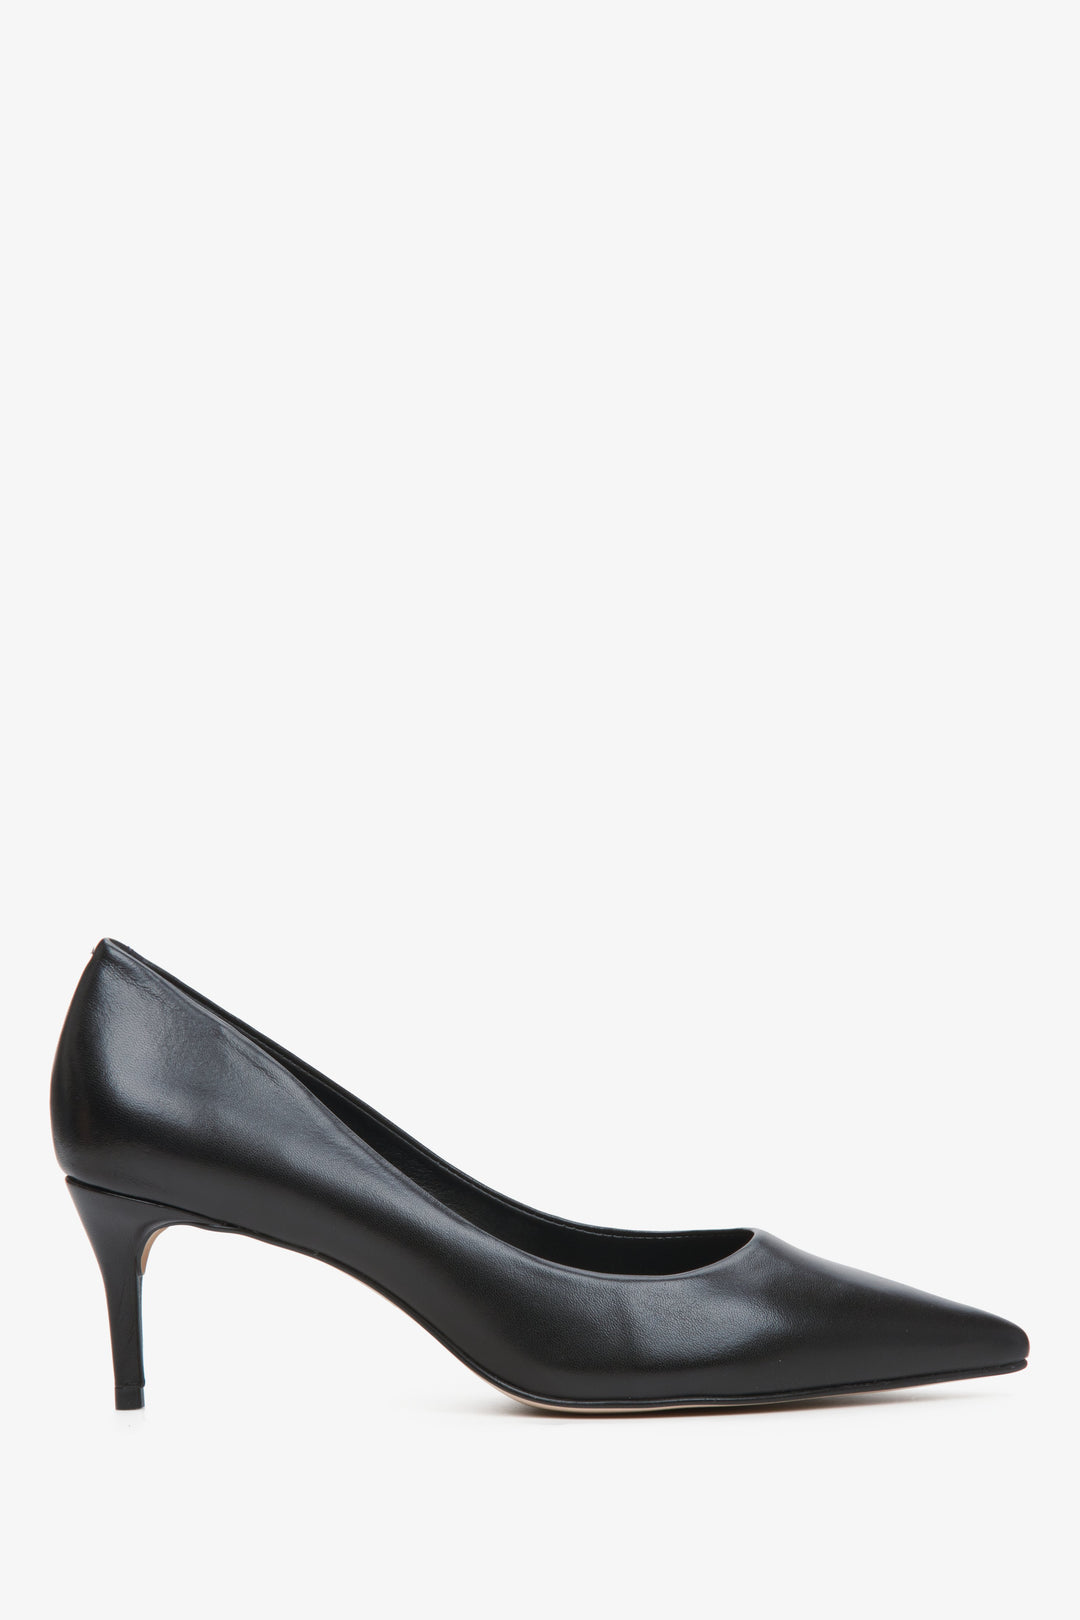 Women's Black Stiletto Heels Pumps made of Genuine Leather Estro ER00113734.